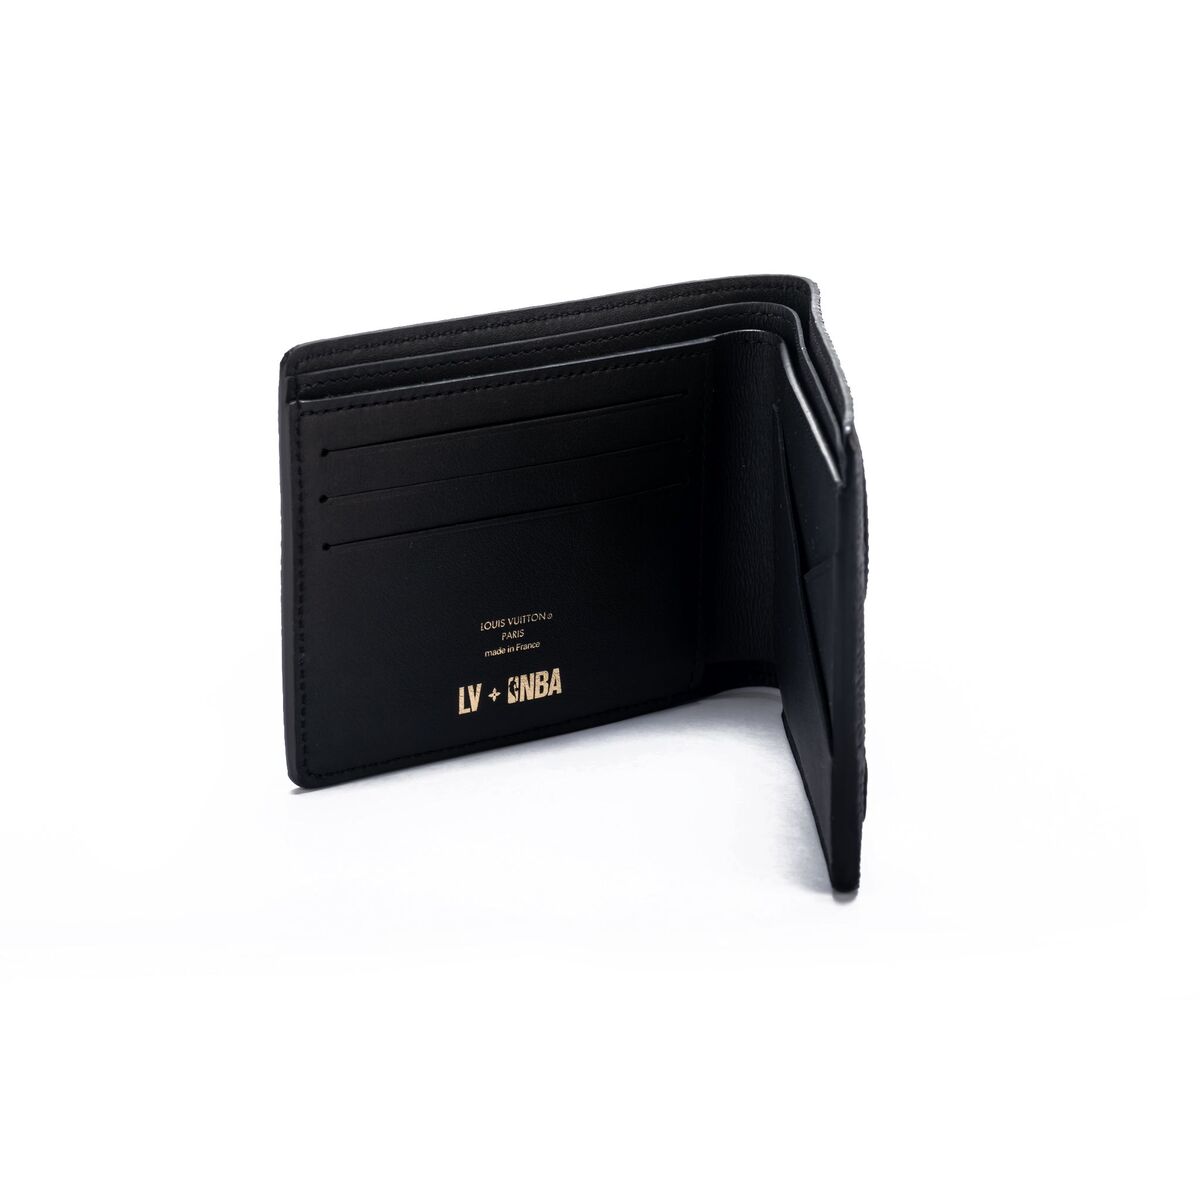 Louis Vuitton x NBA - Monogram Multiple Wallet – eluXive